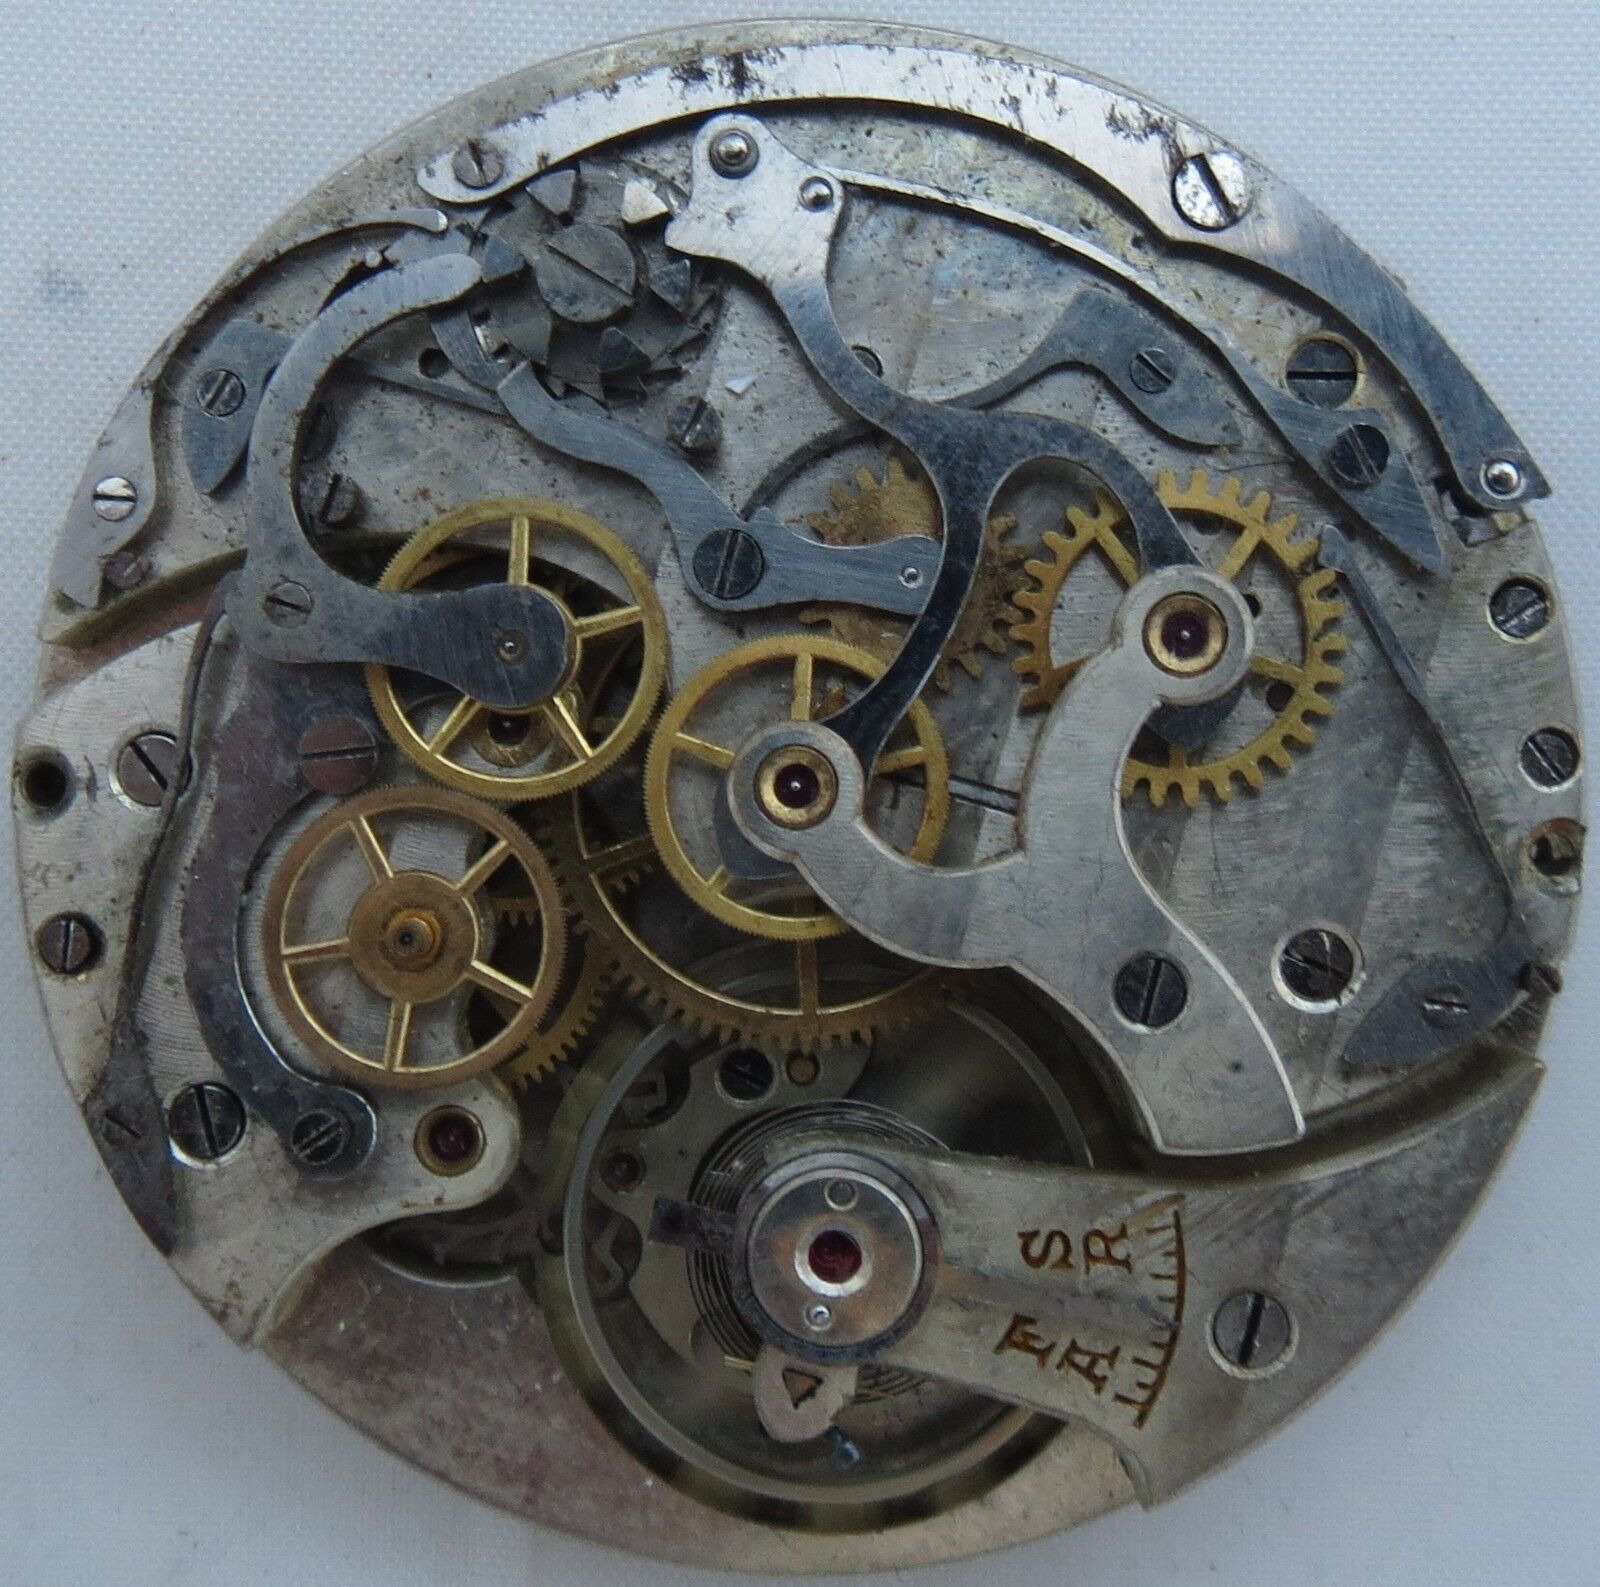 XFine Chronograph Pocket watch movement 43 mm. in diameter balance Ok.